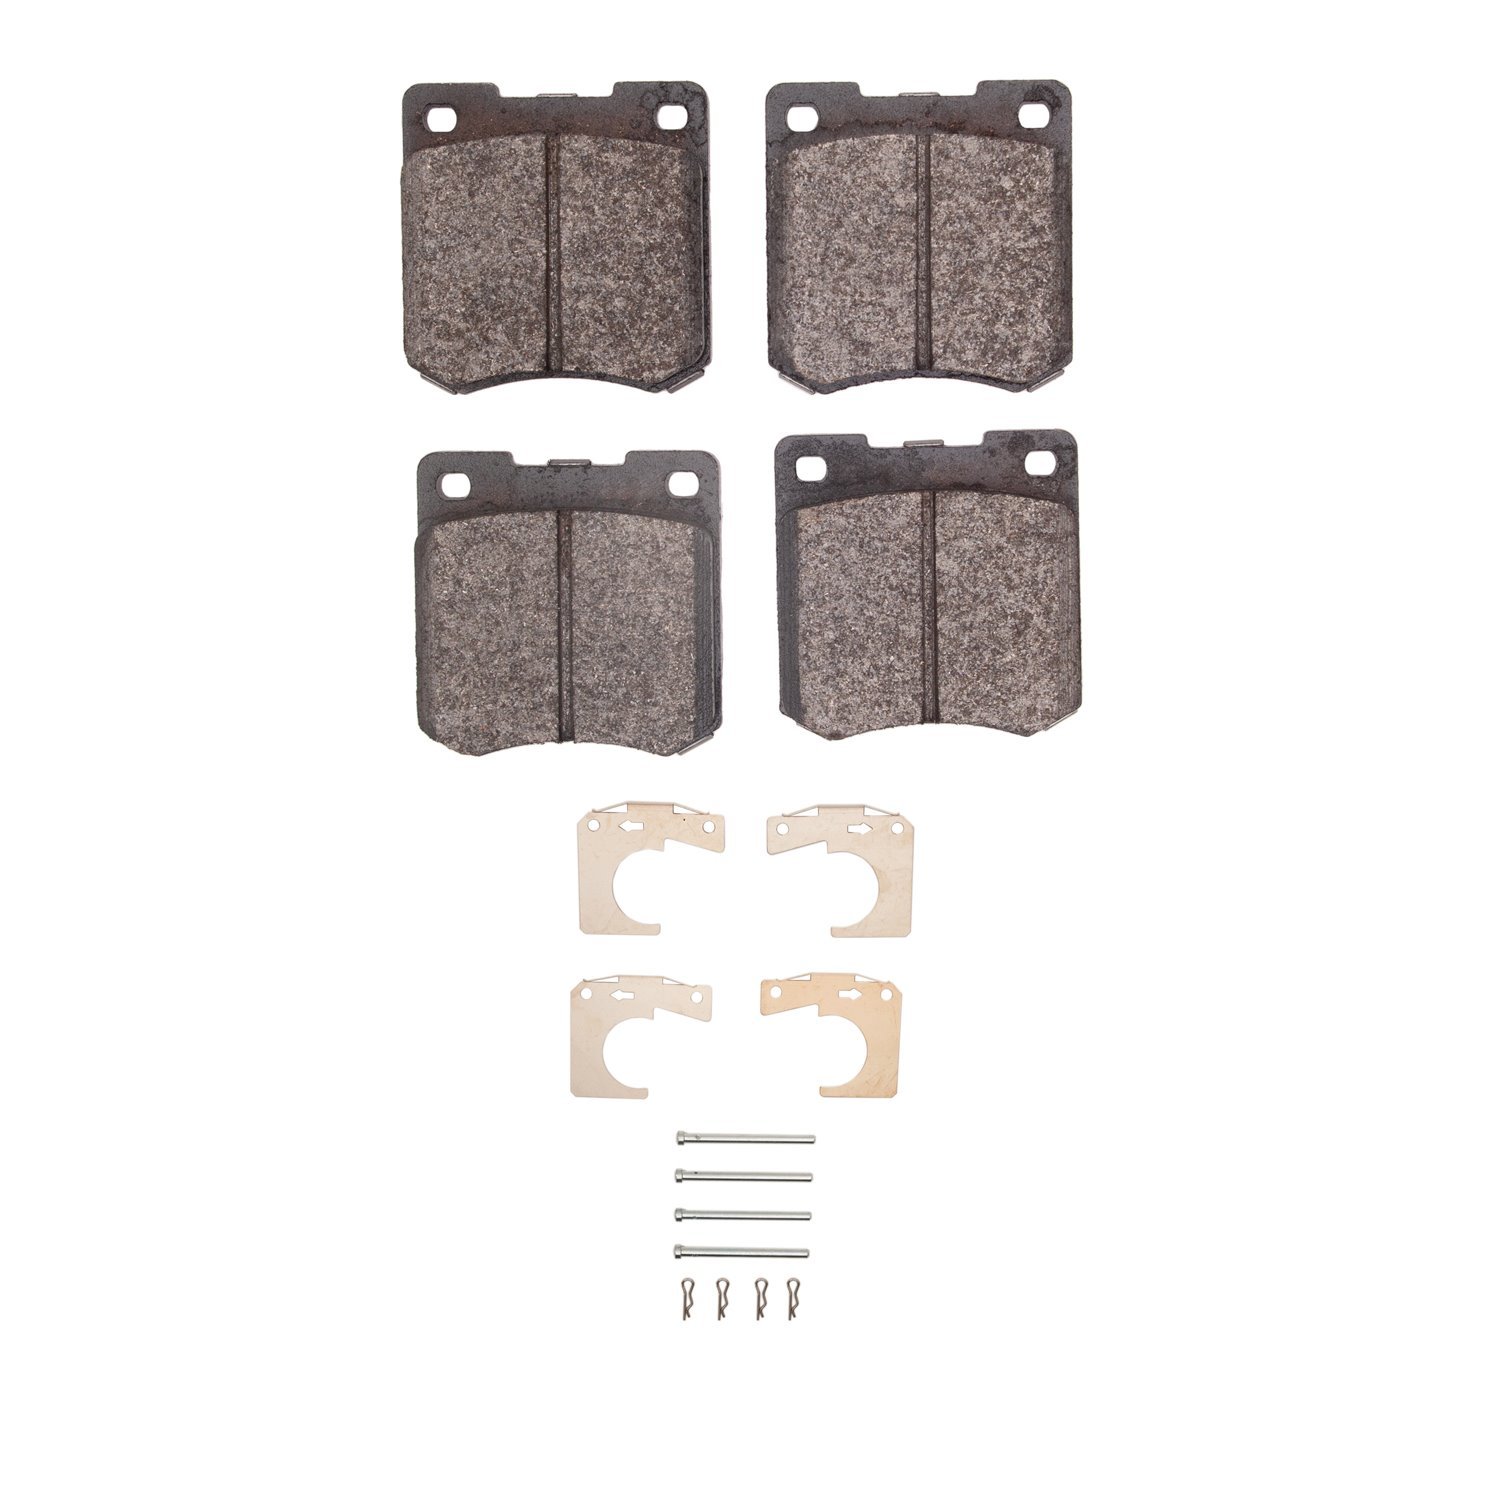 Optimum OE Brake Pads & Hardware Kit, 1967-1975 Fits Multiple Makes/Models, Position: Front